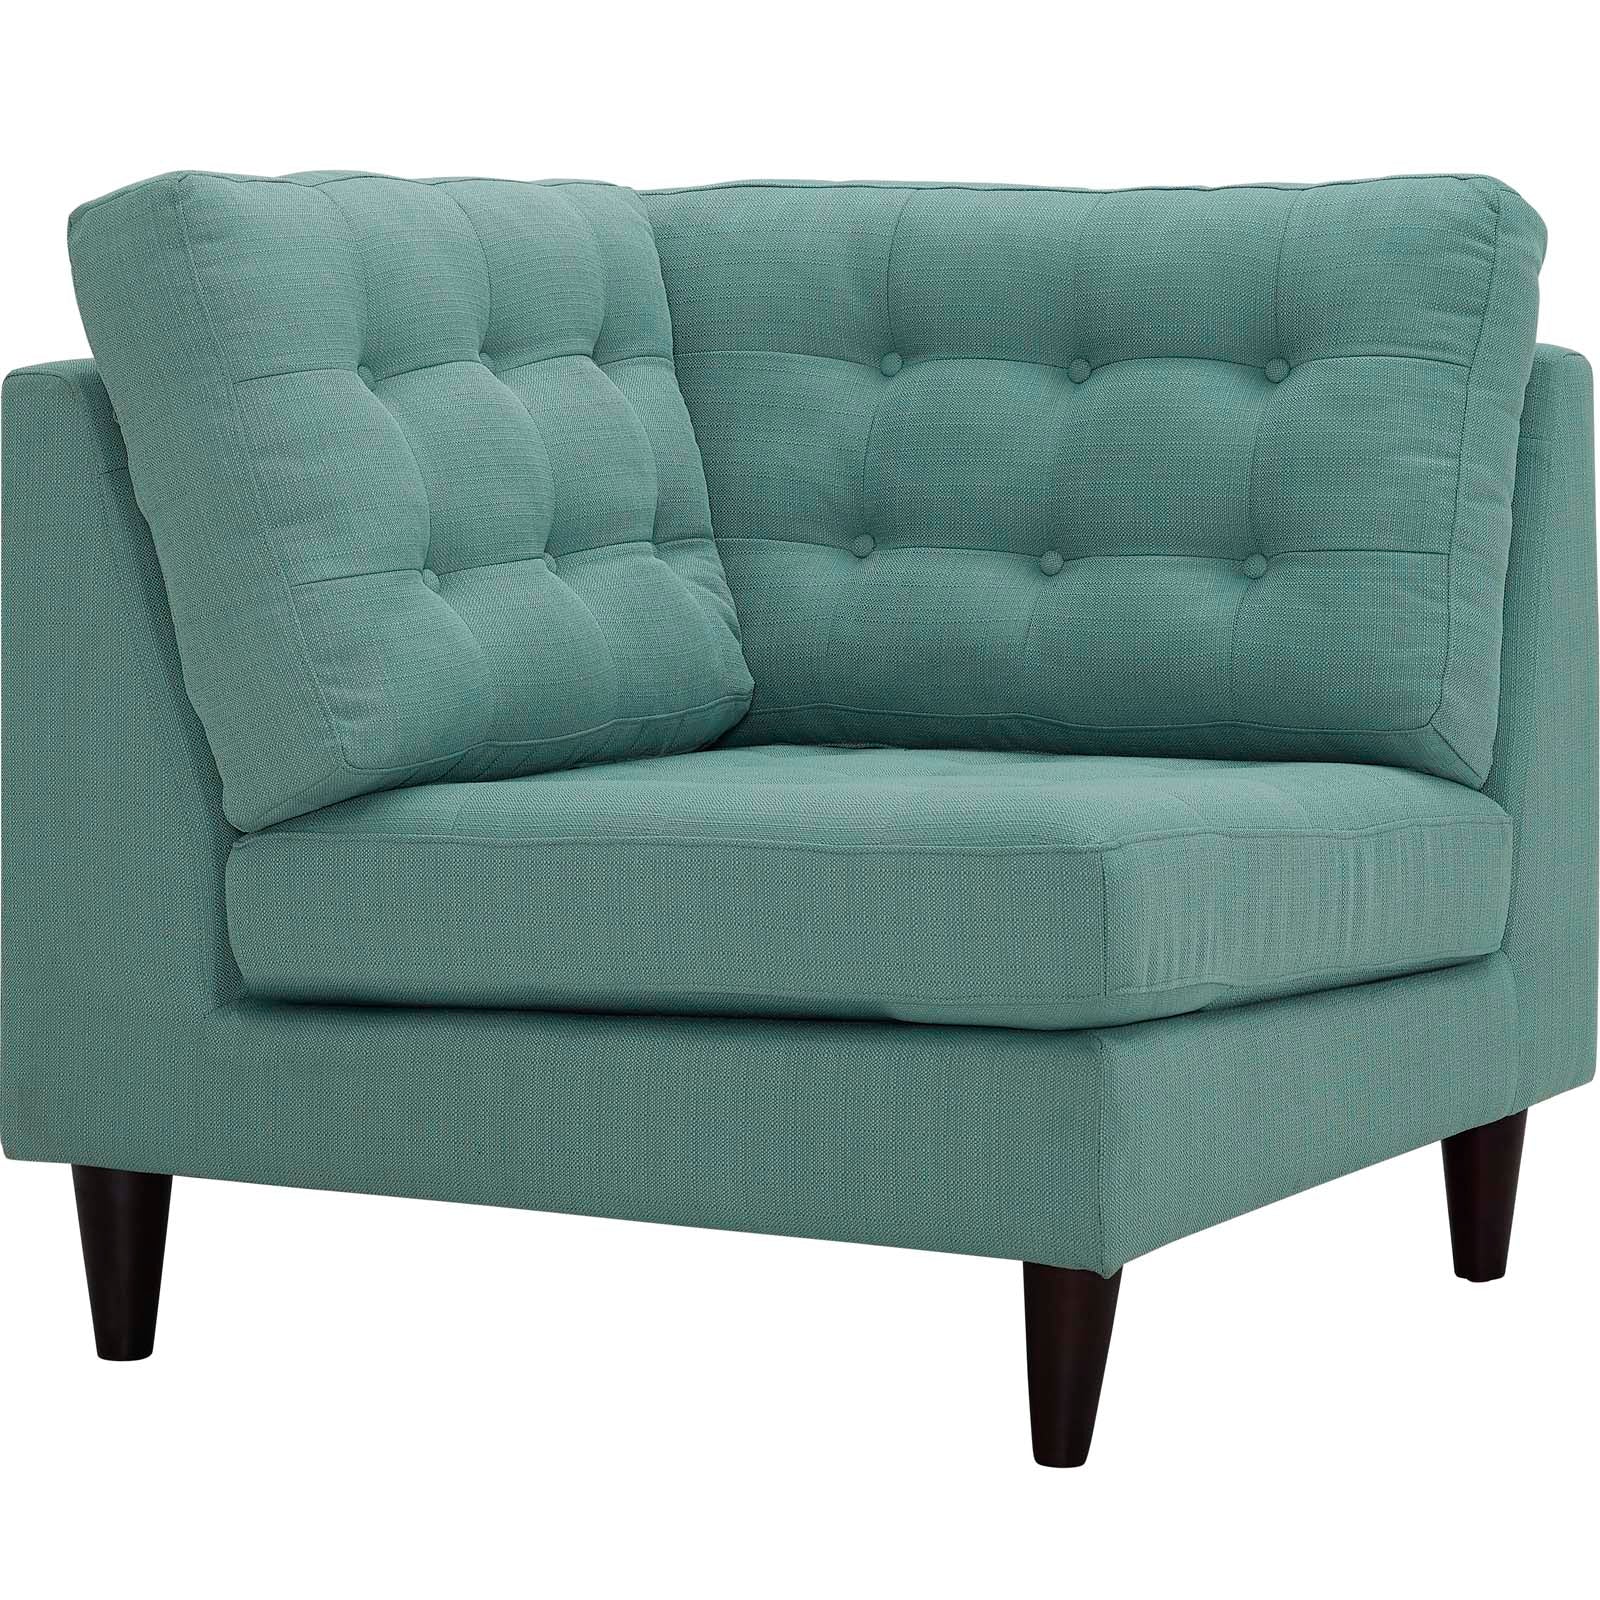 Empress Upholstered Fabric Corner Sofa - East Shore Modern Home Furnishings